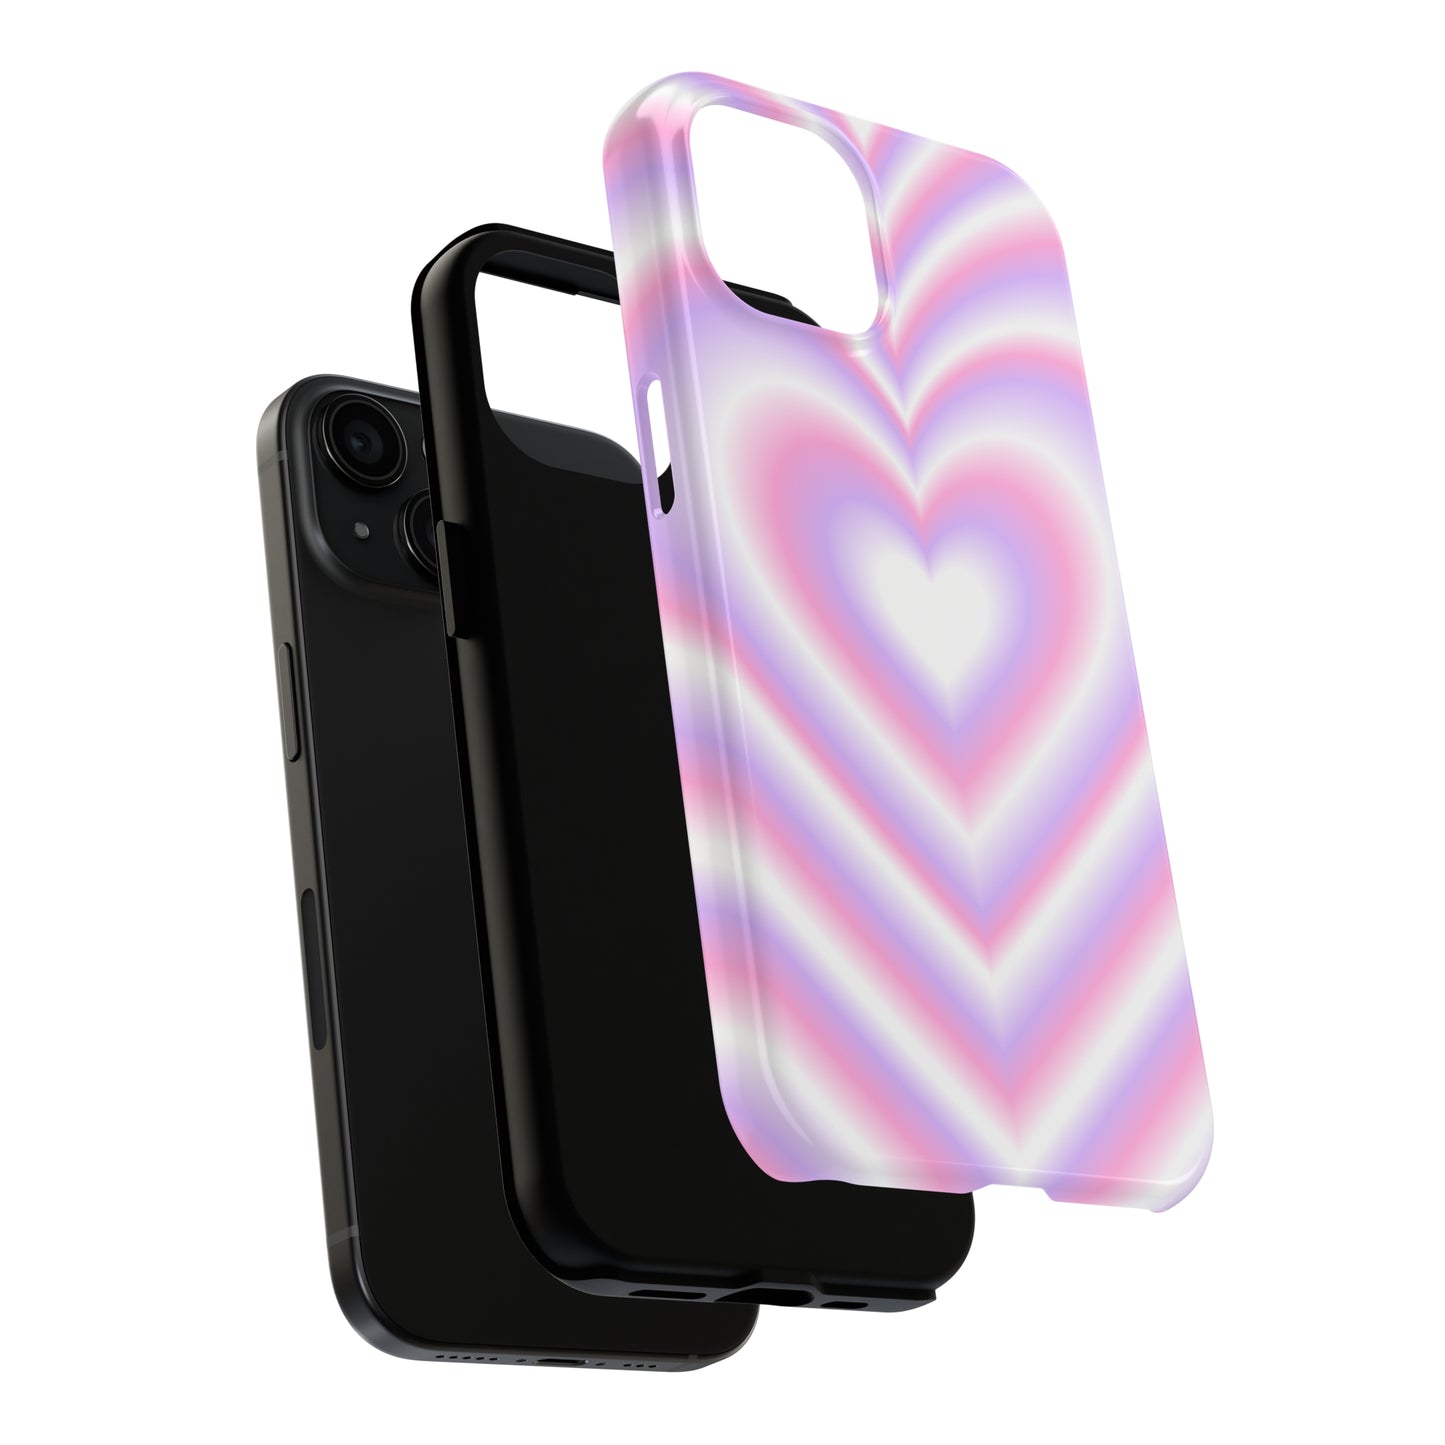 Blurred Heart Tough iPhone Case